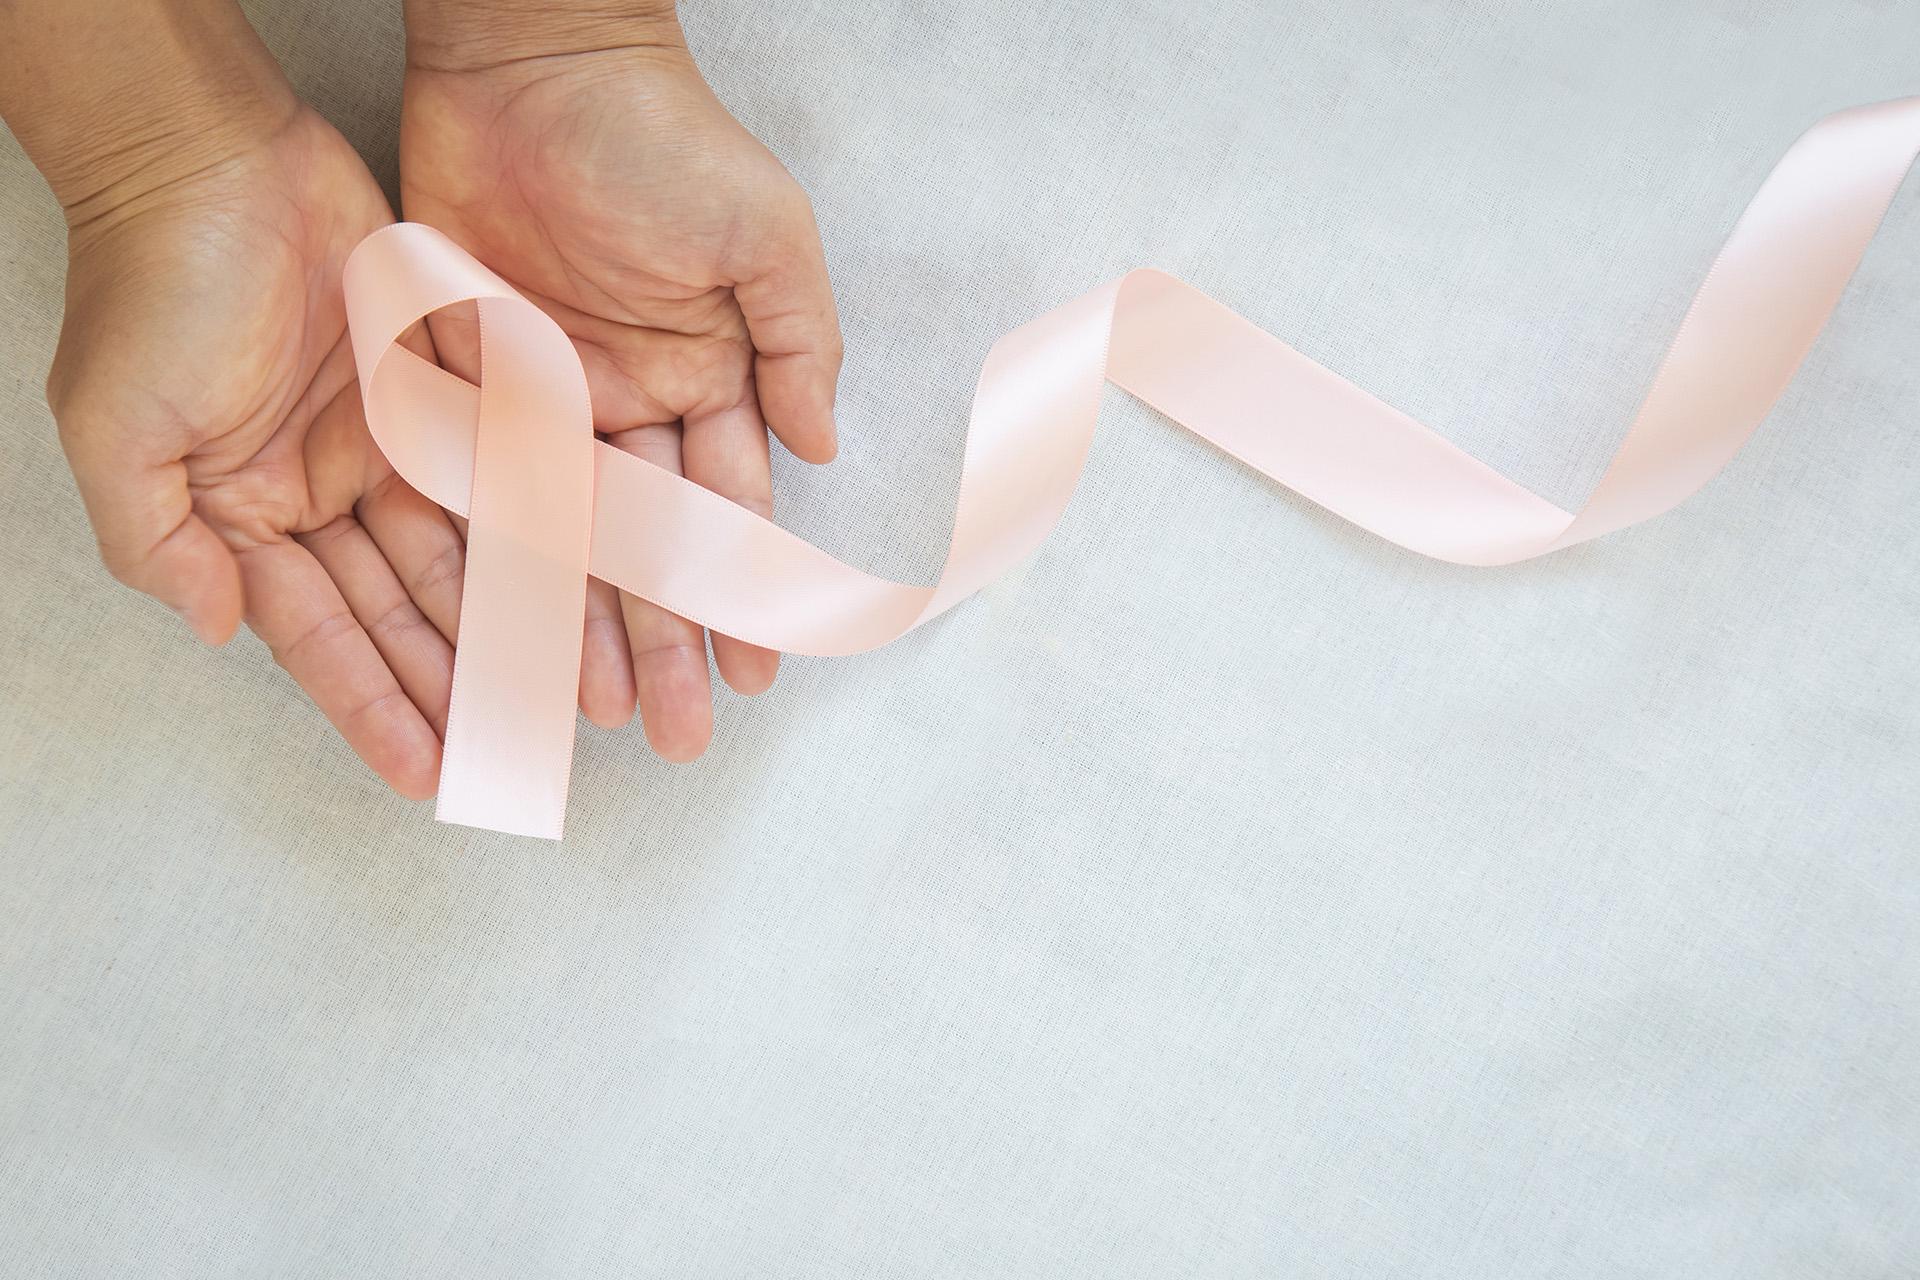 गर्भाशय कैंसर: प्रारंभिक लक्षण, कारण, चरण और उपचार